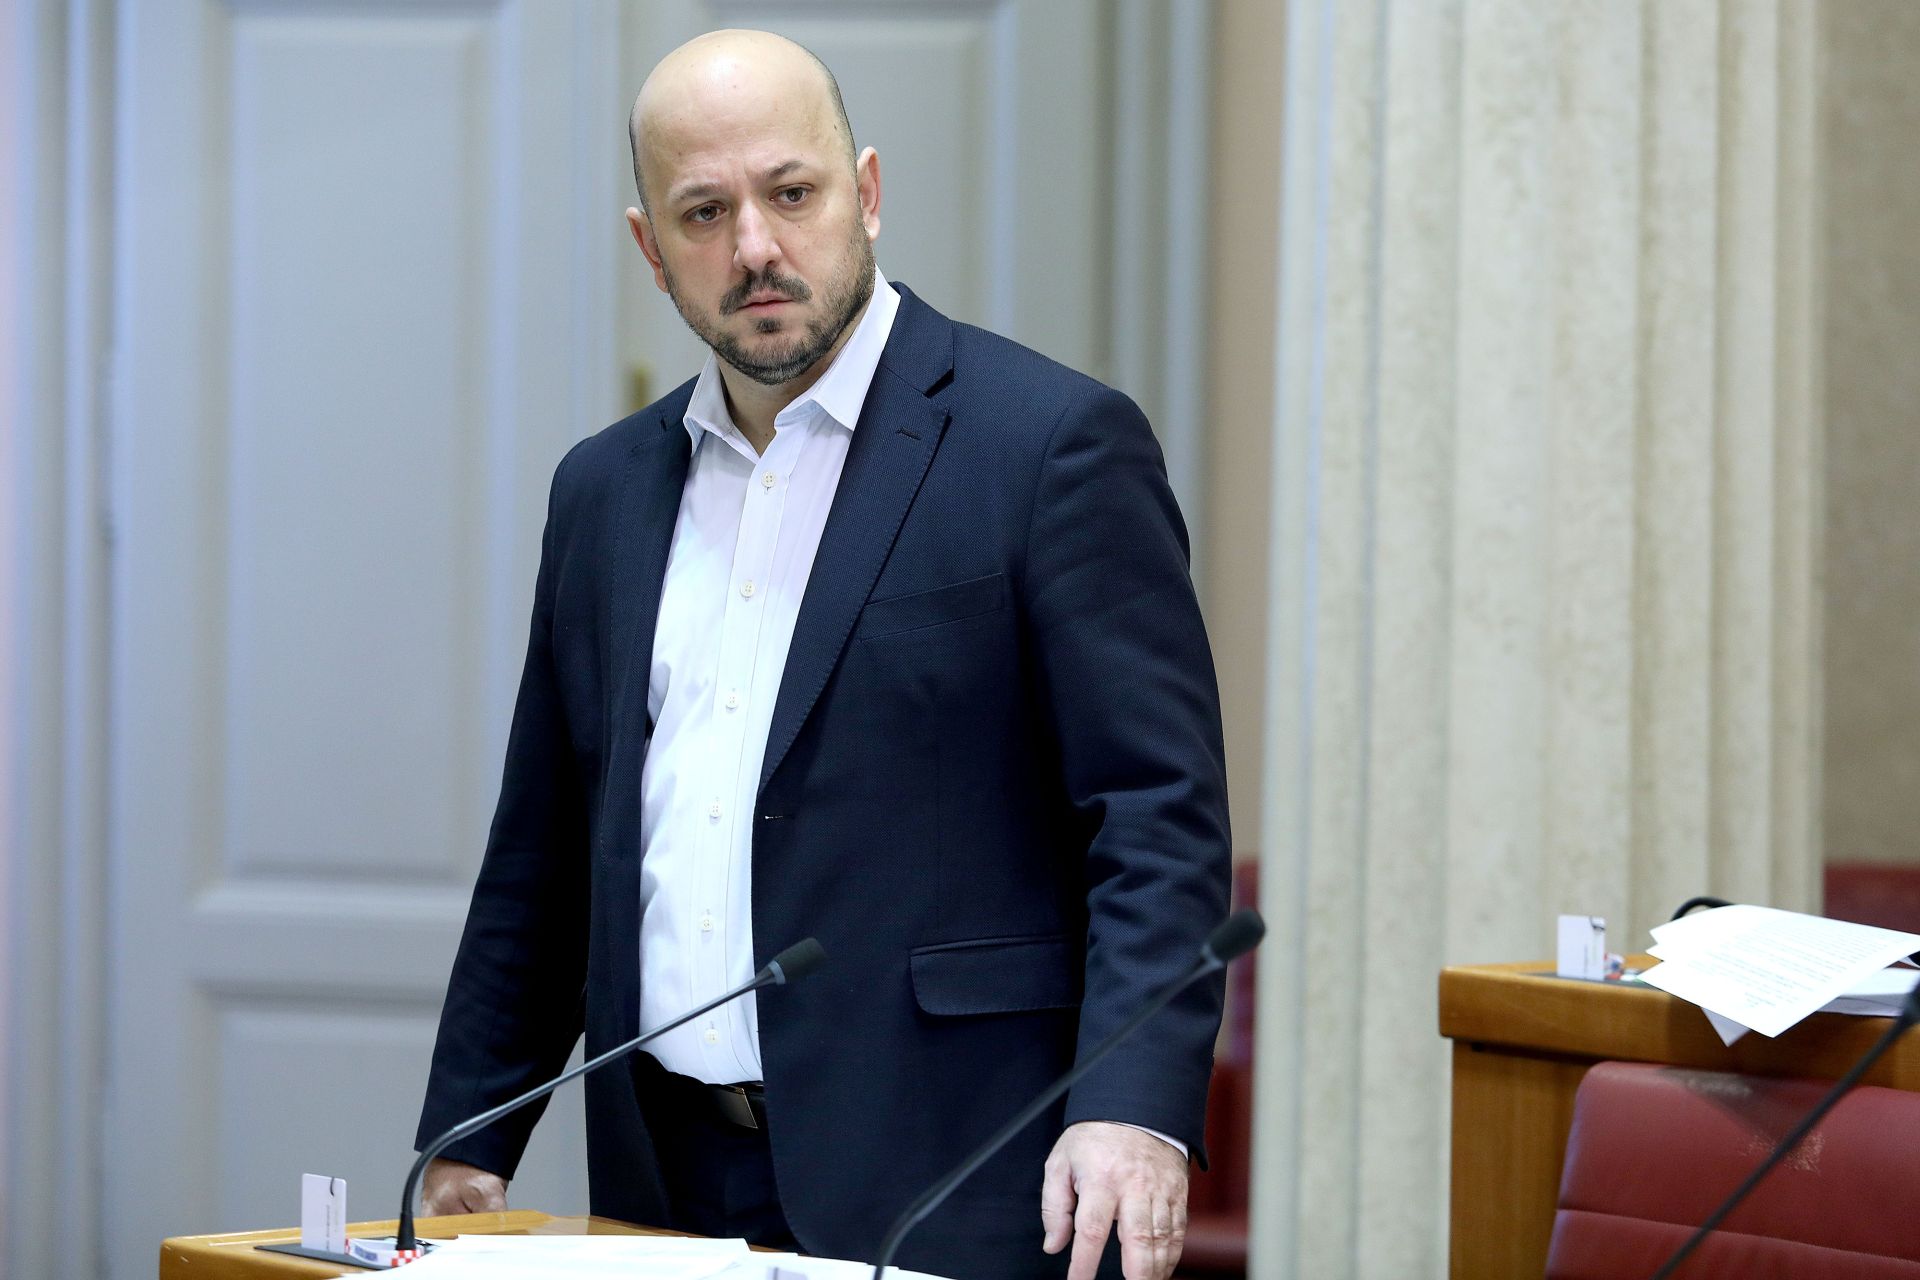 Maras (SDP) tvrdi da HDZ slabi civilno društvo, Šimić (HDZ) kaže da to nije točno